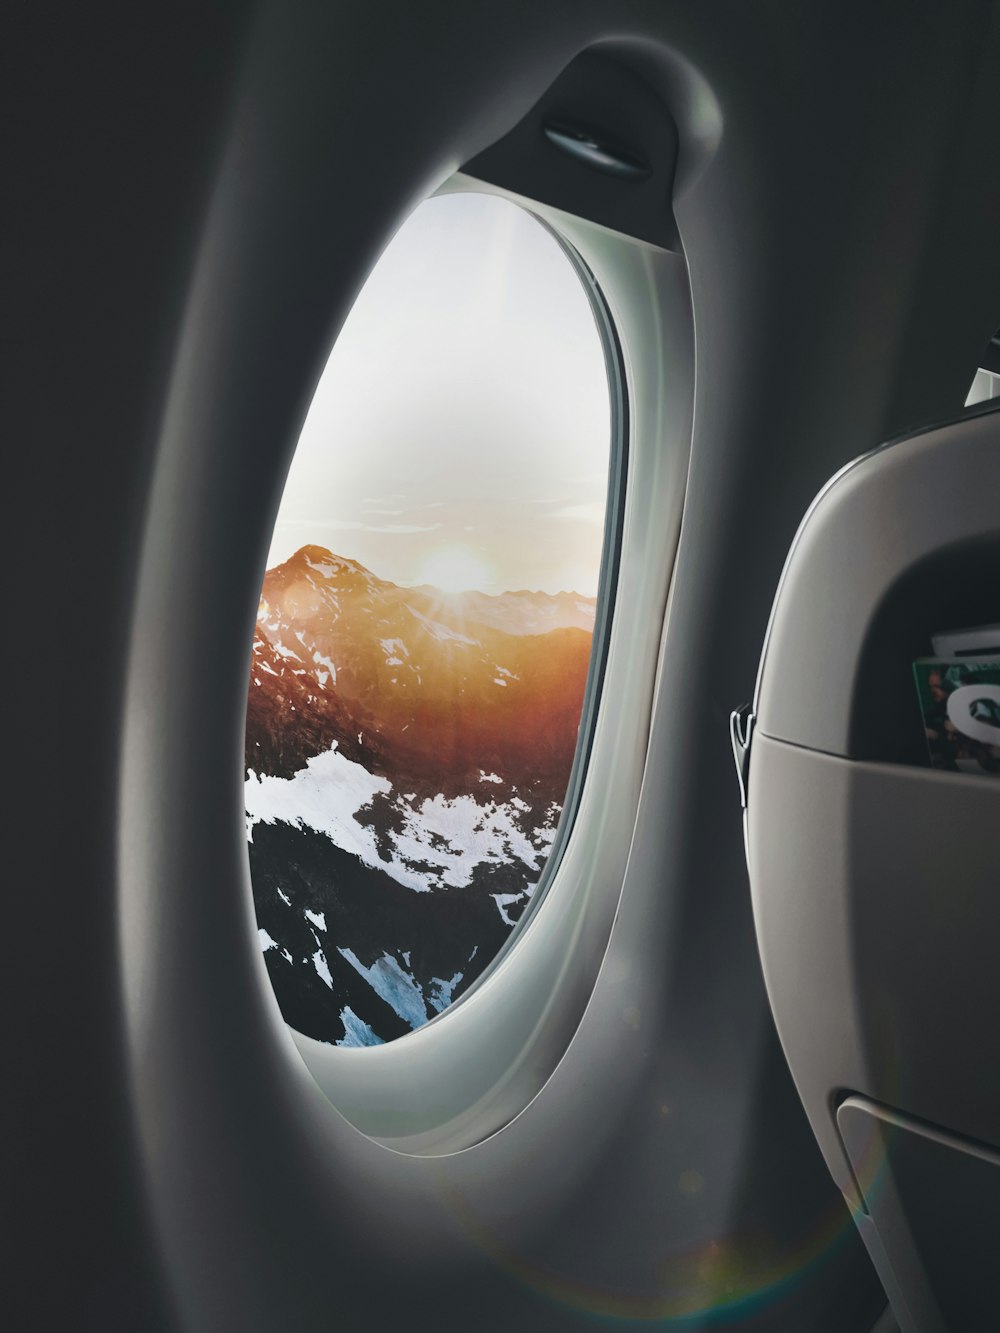 plane window showing mountain